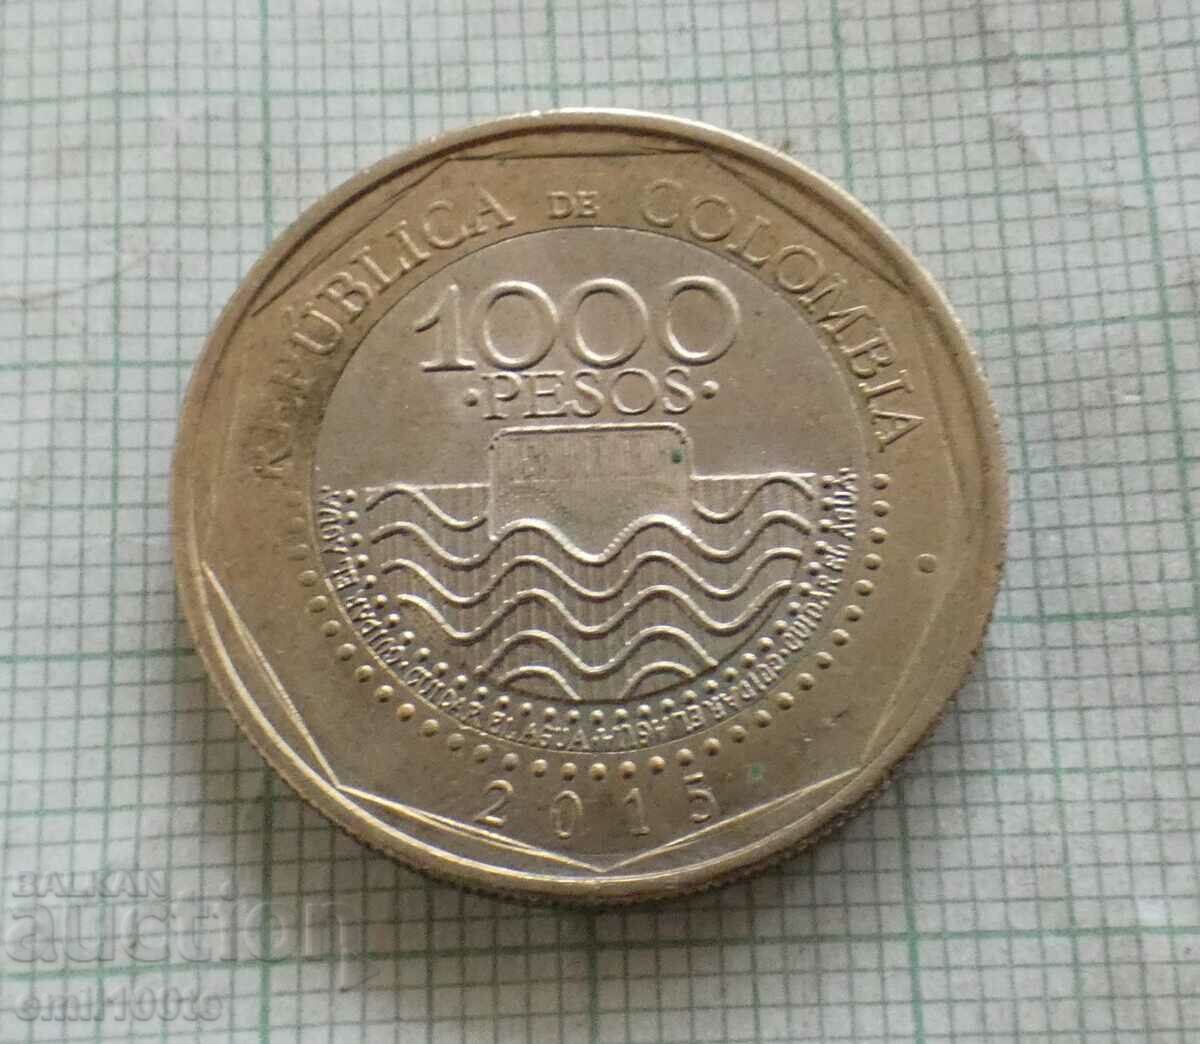 1000 pesos 2015 Colombia